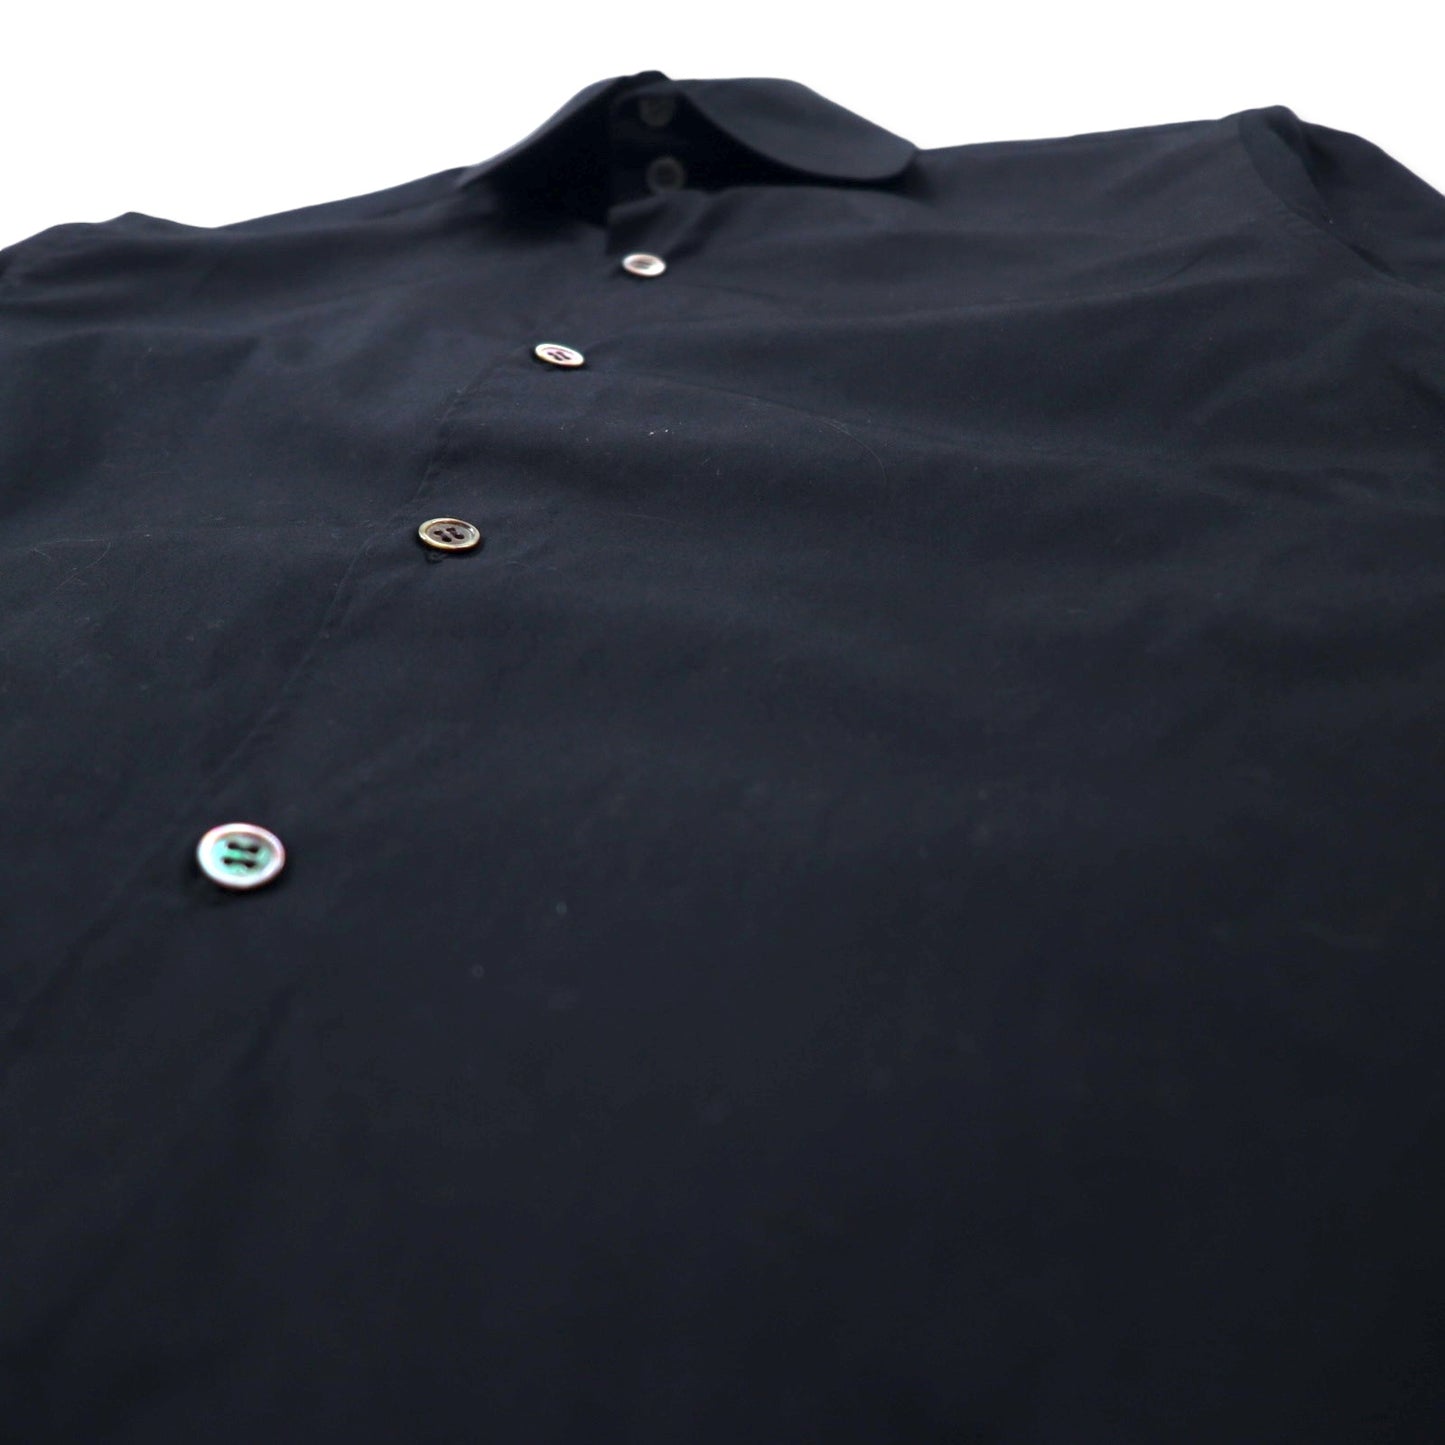 Y's YOHJI YAMAMOTO マリンカラー ドレスシャツ 3 ブラック コットン 丸襟 YE-B09-001日本製